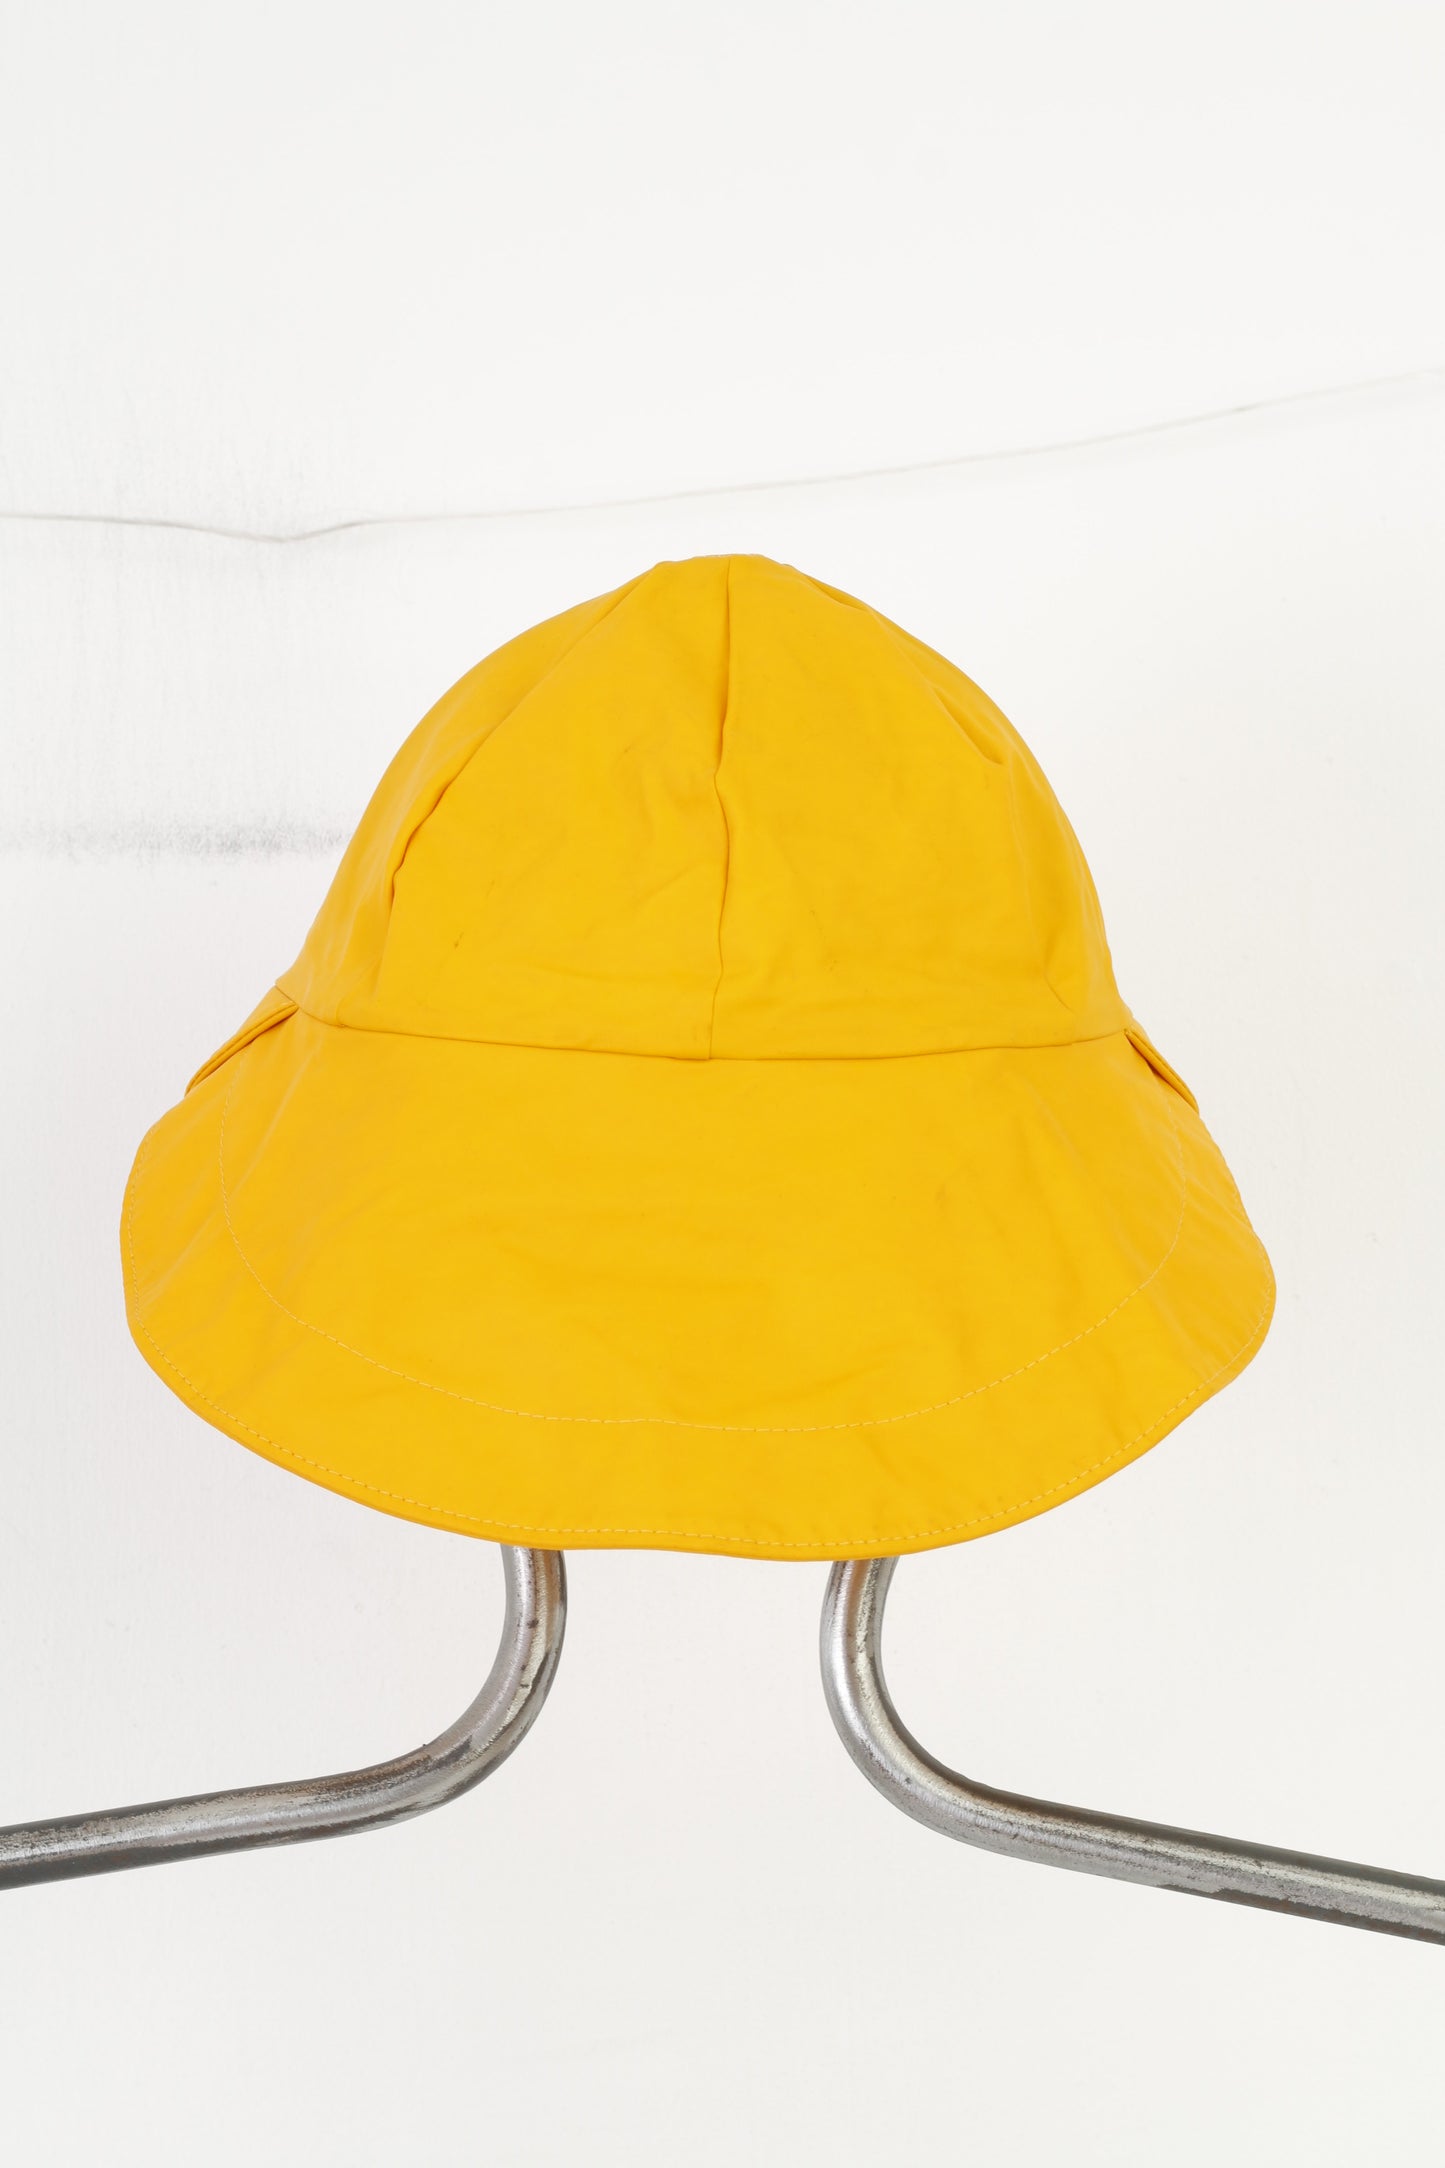 66 North Iceland Men 2XL Raincoat Set Hat Yellow Hood Full Zipper Polyamid Pockets Vintage Waterproof Top